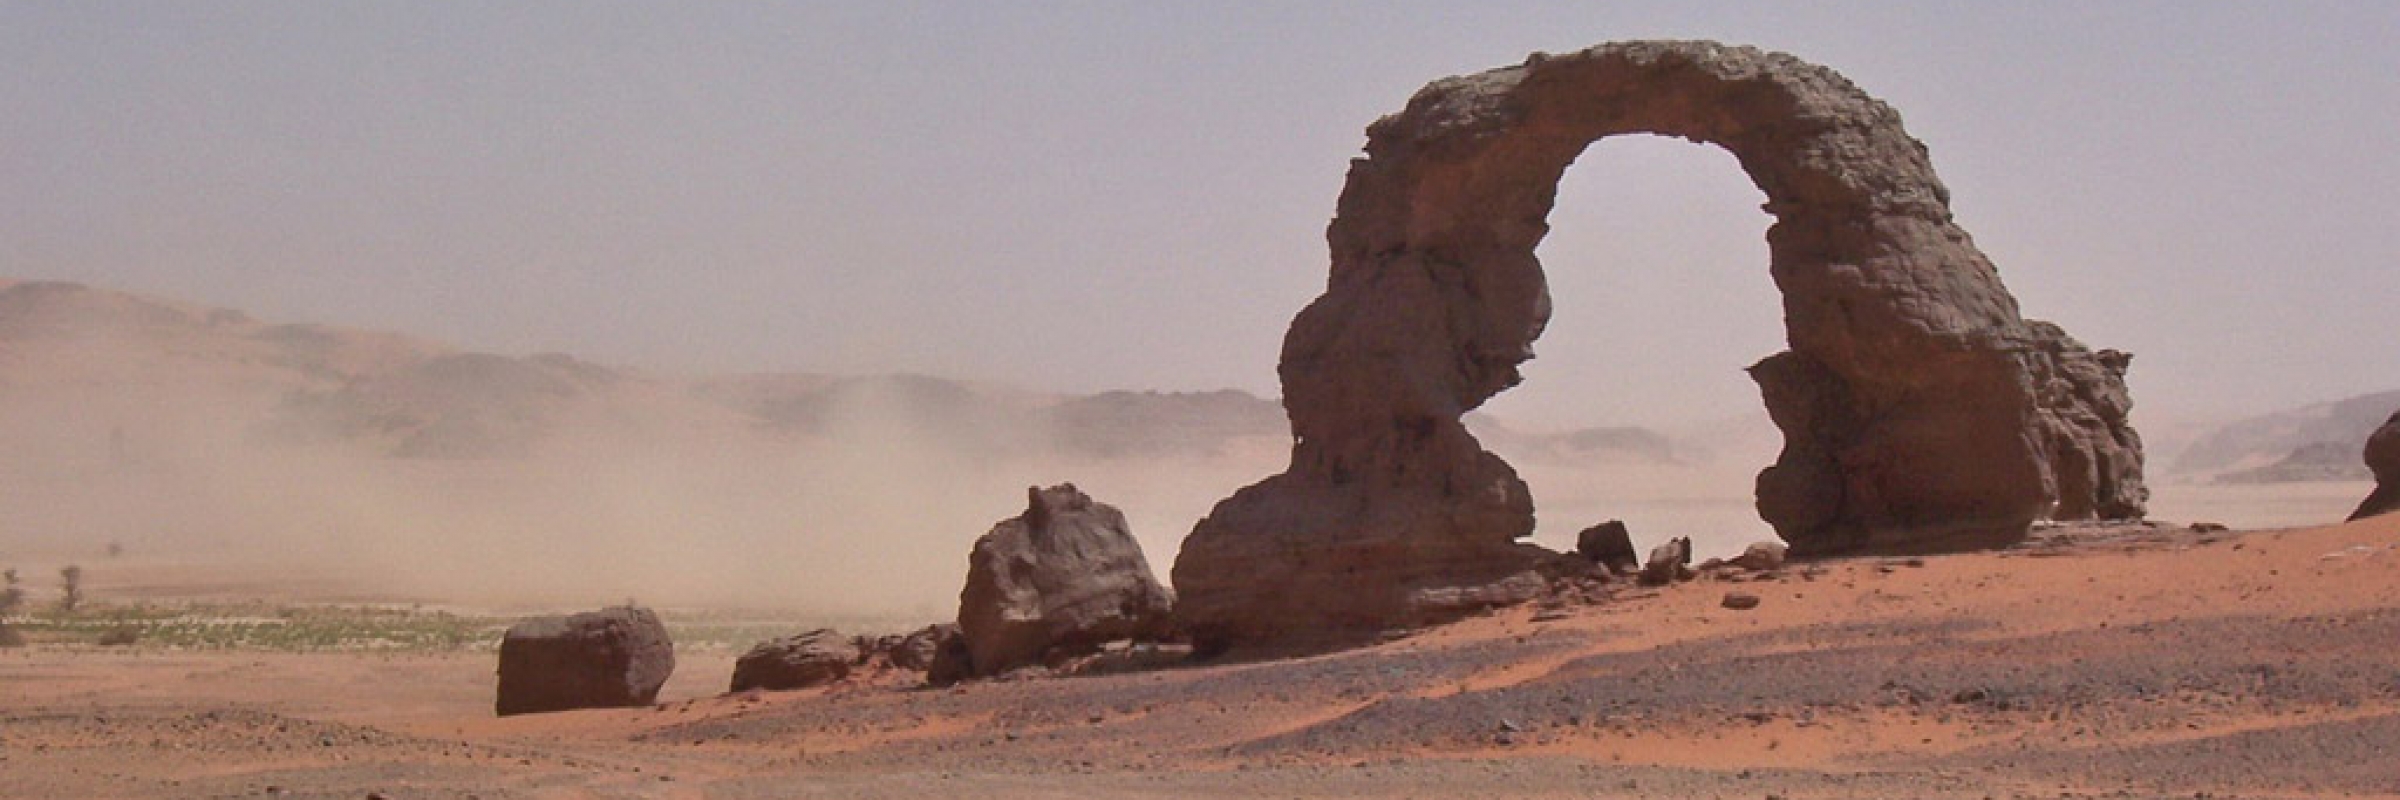 algeria_deserto